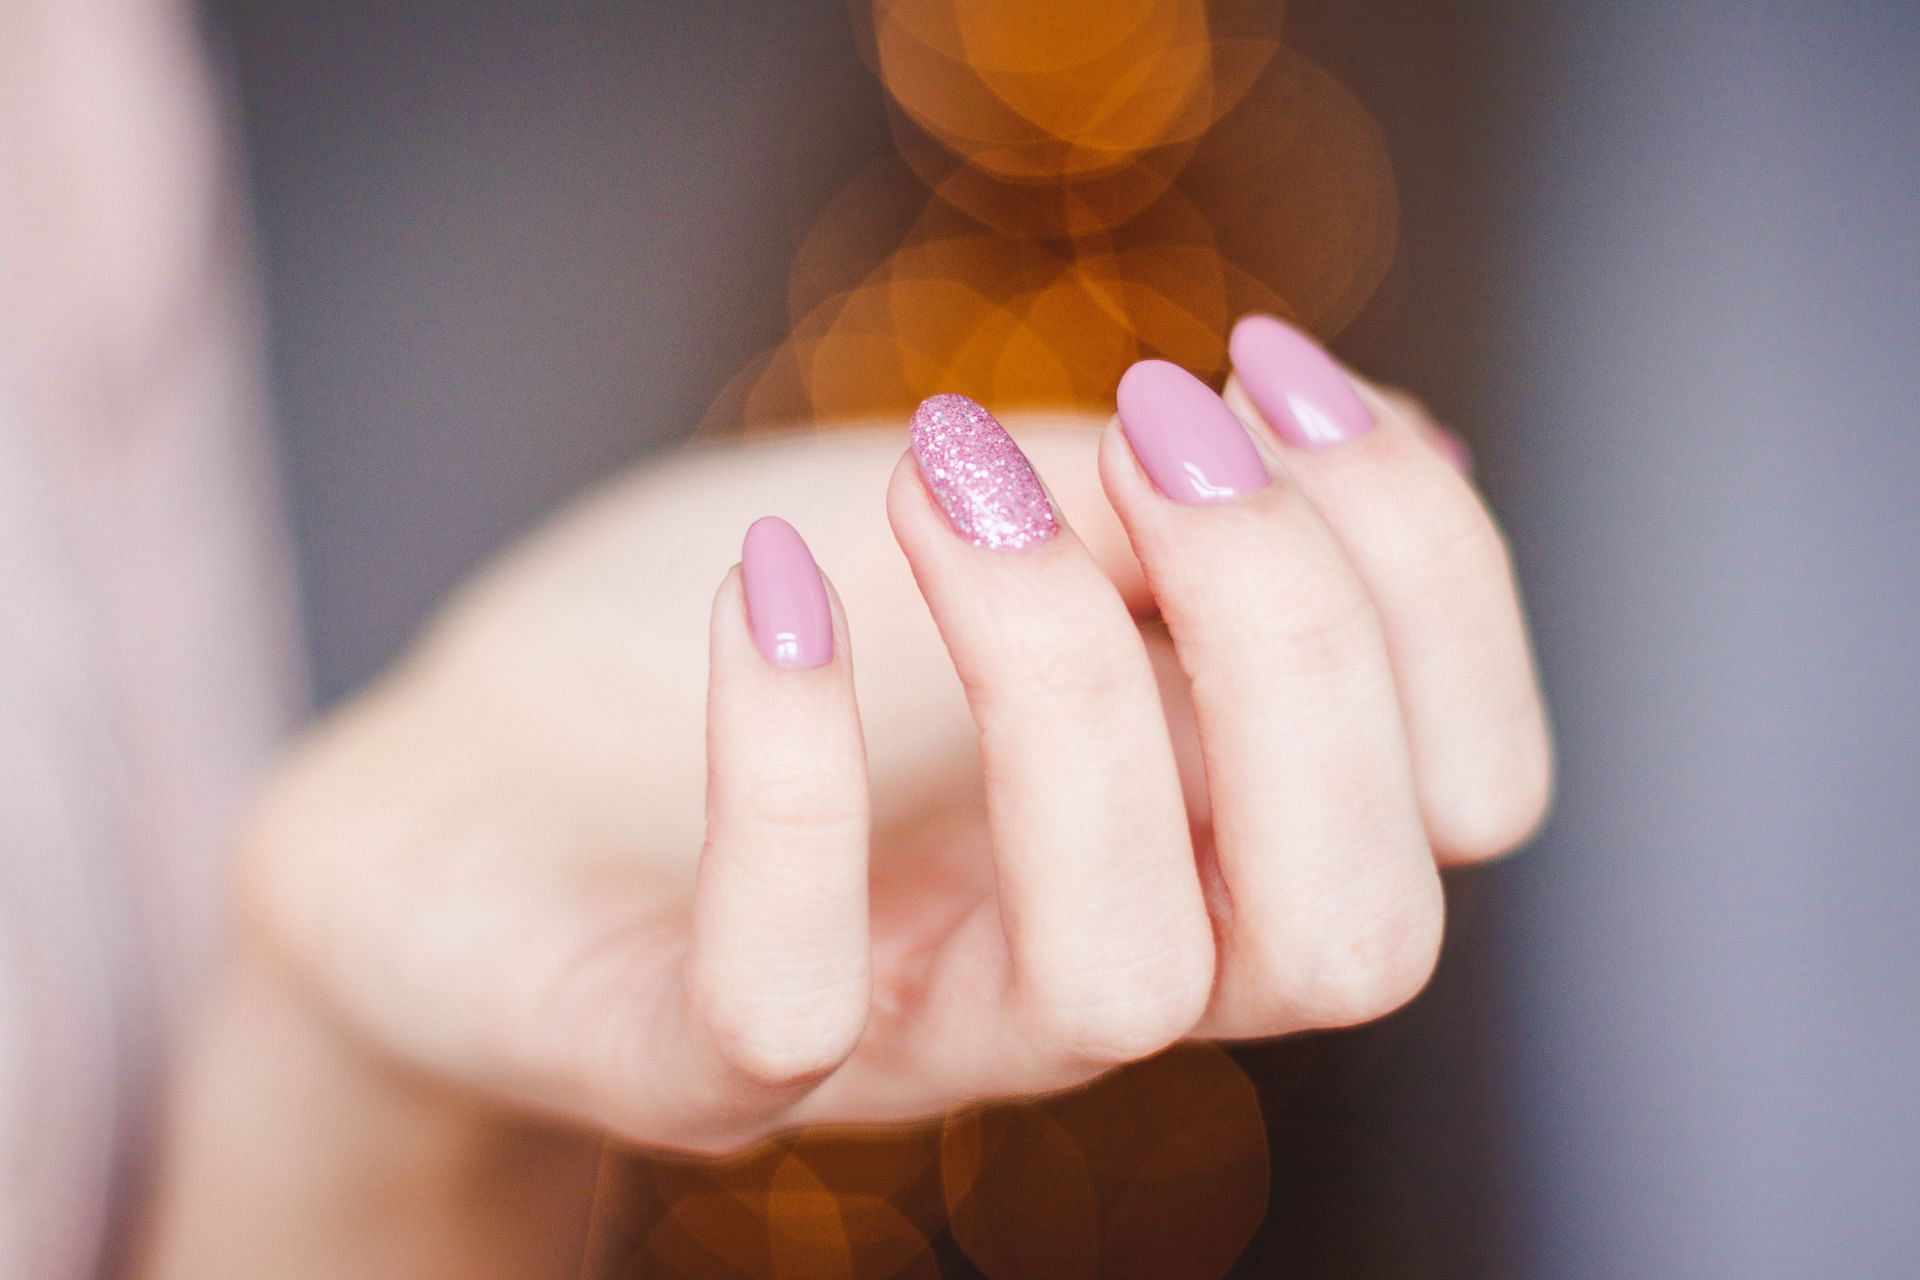 Brittle nails are prone to breaking easily. (Image via Pexels/ Valeria Boltneva)